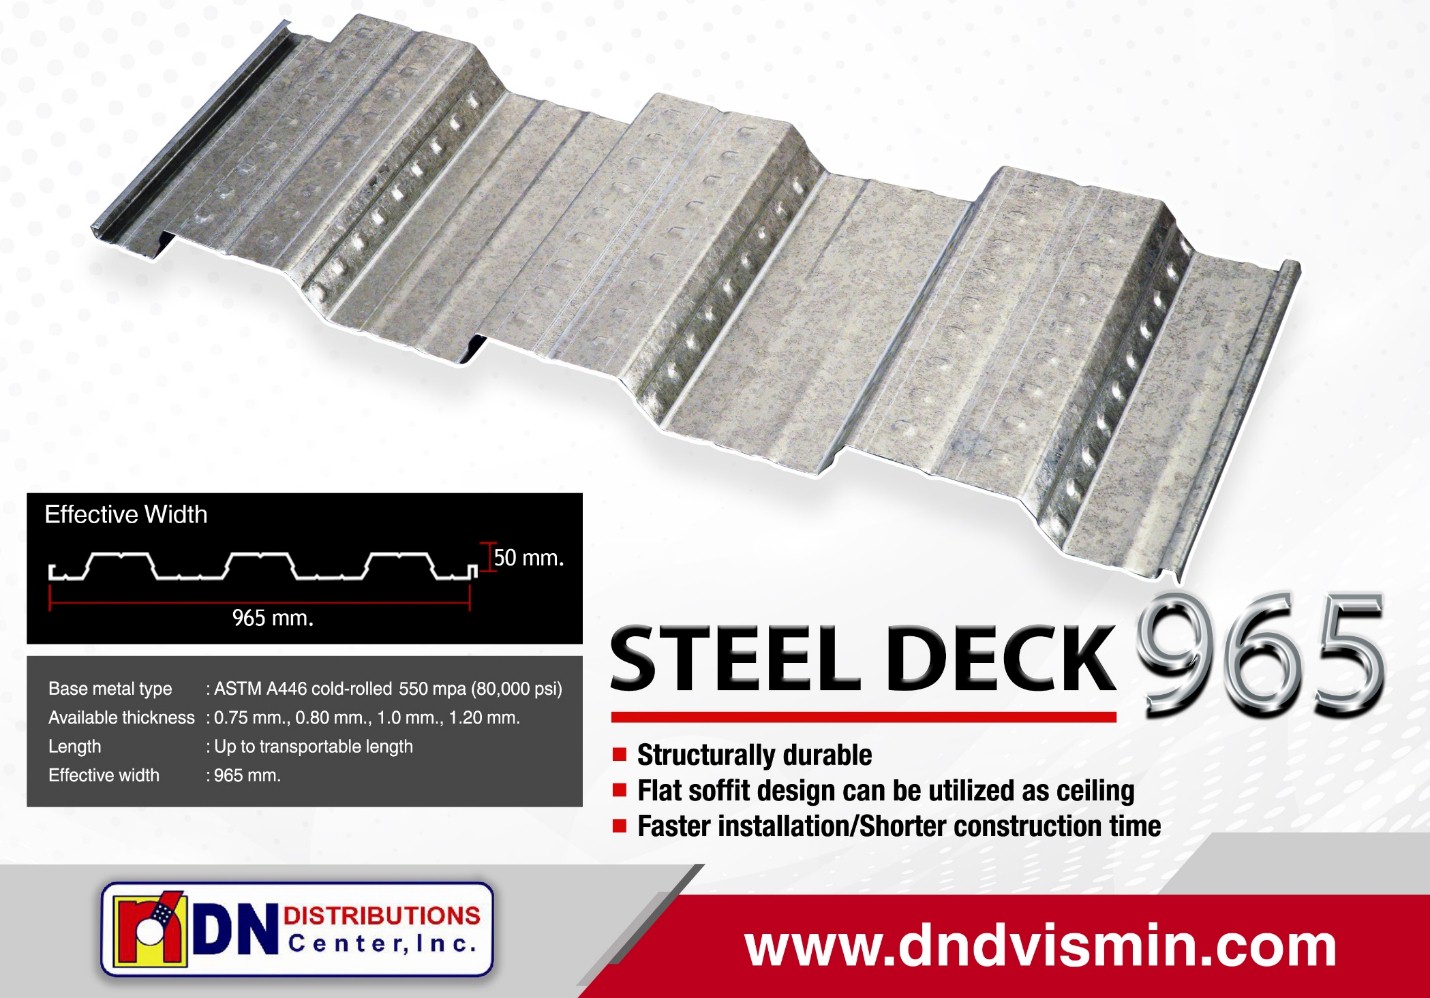 Steel deck 965